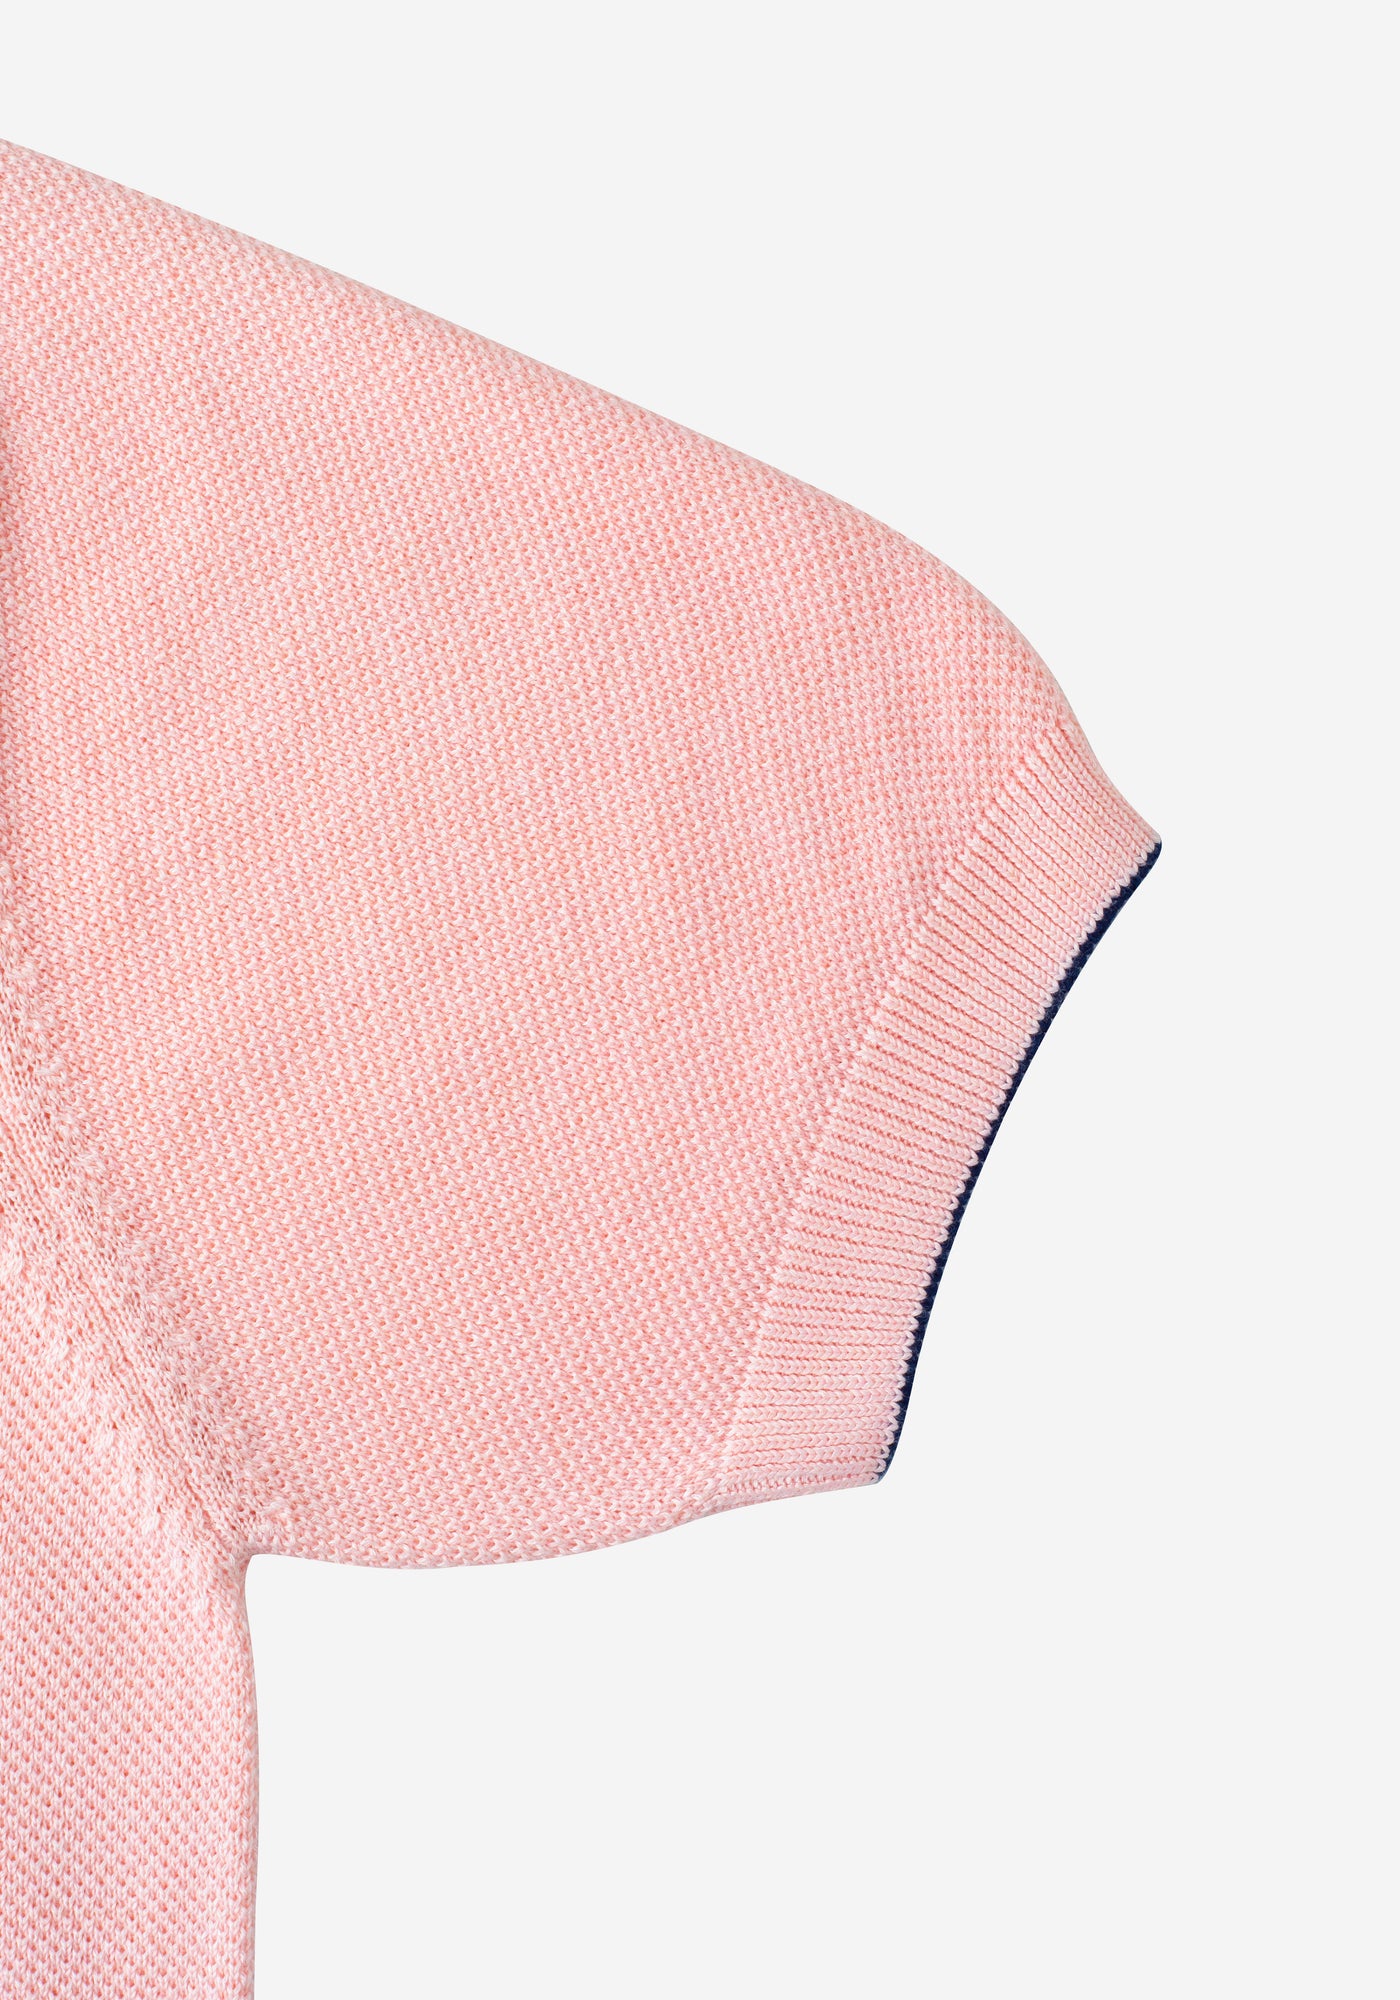 Blush Rose Knitted Polo Shirt